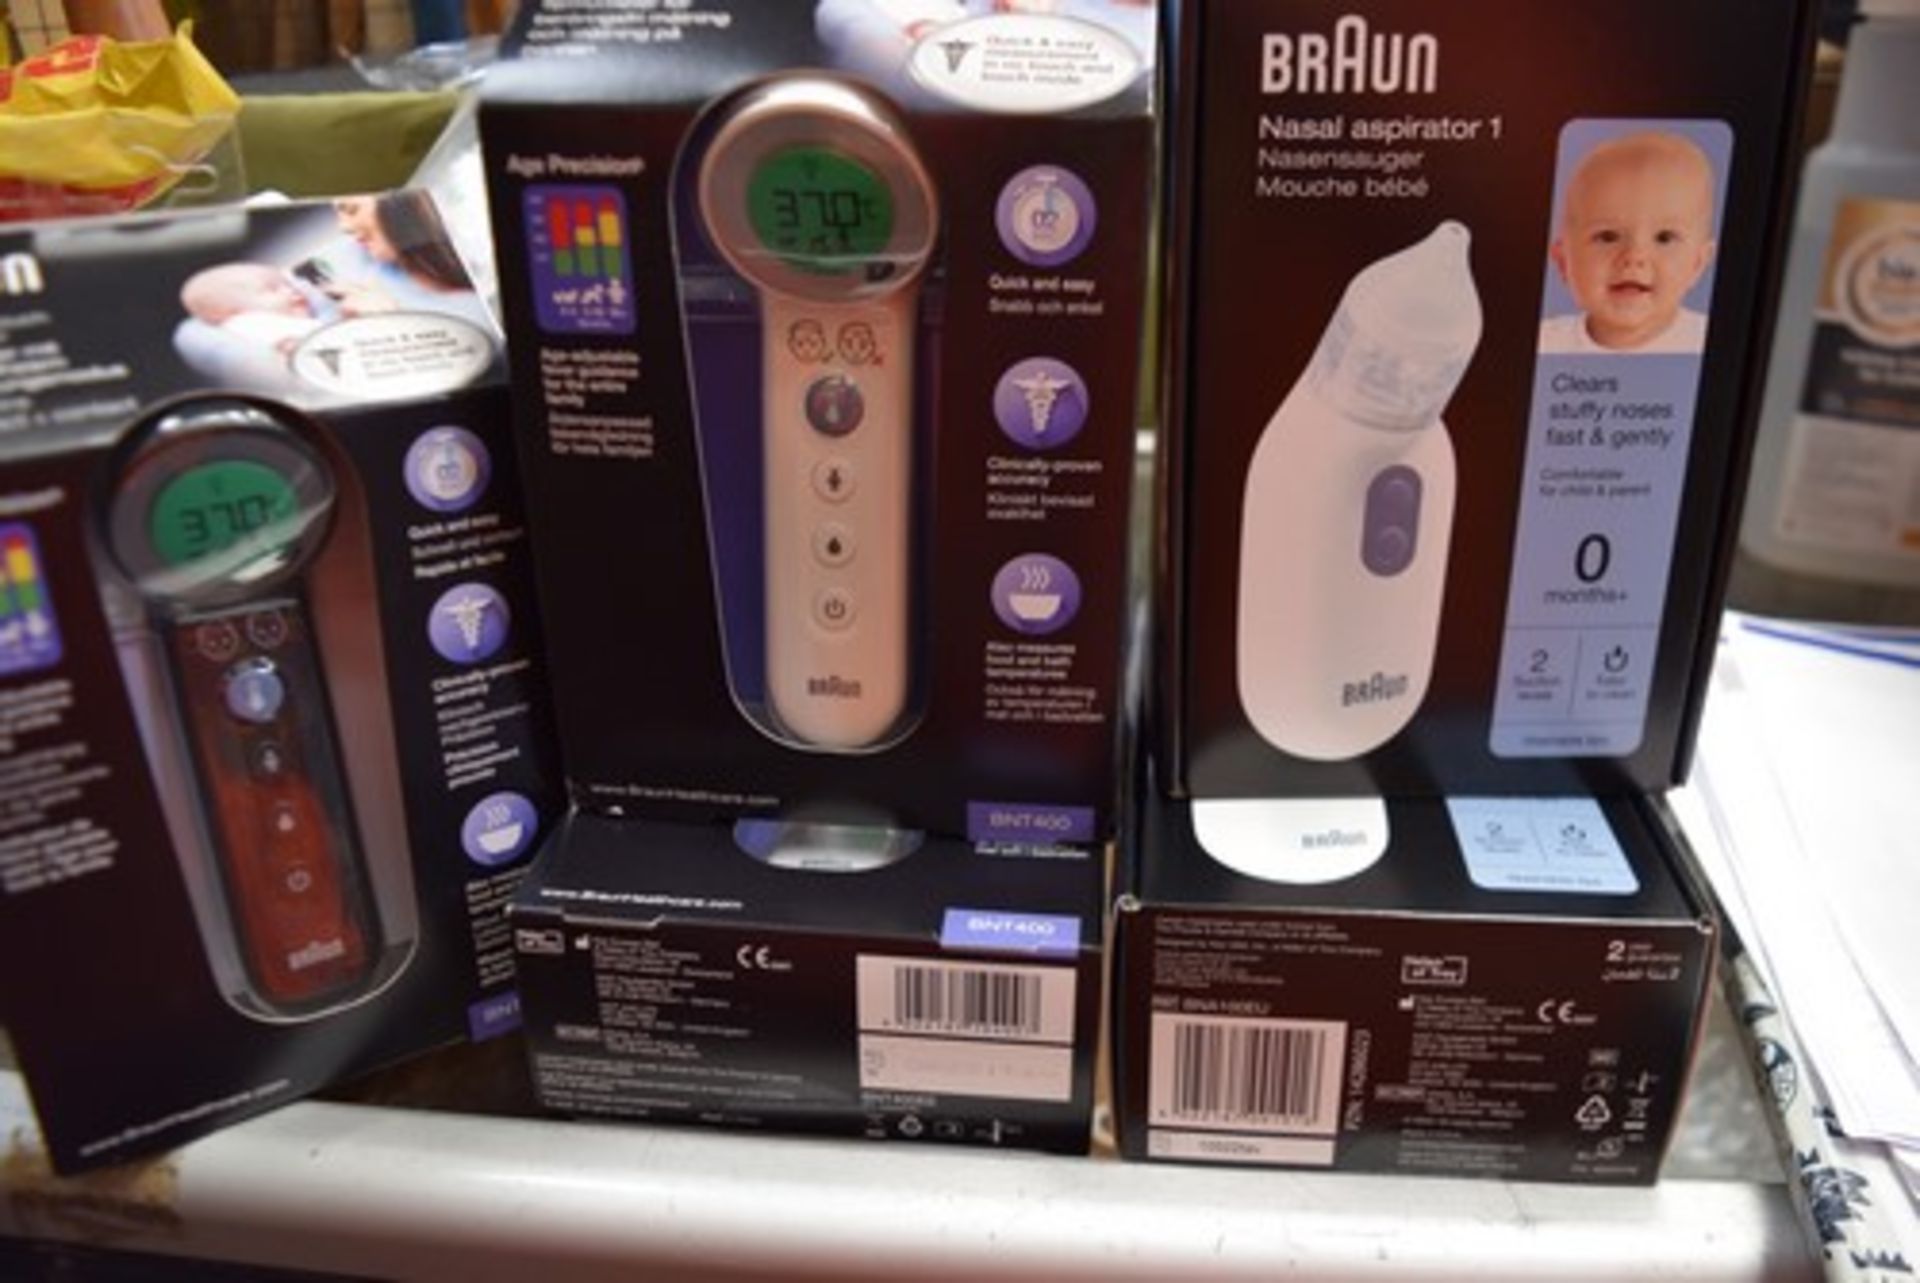 2 x Braun nasal aspirator 1 units, Ref: BNA100EU, EAN: 4022167001016, 2 x Braun BNT400 No Touch +